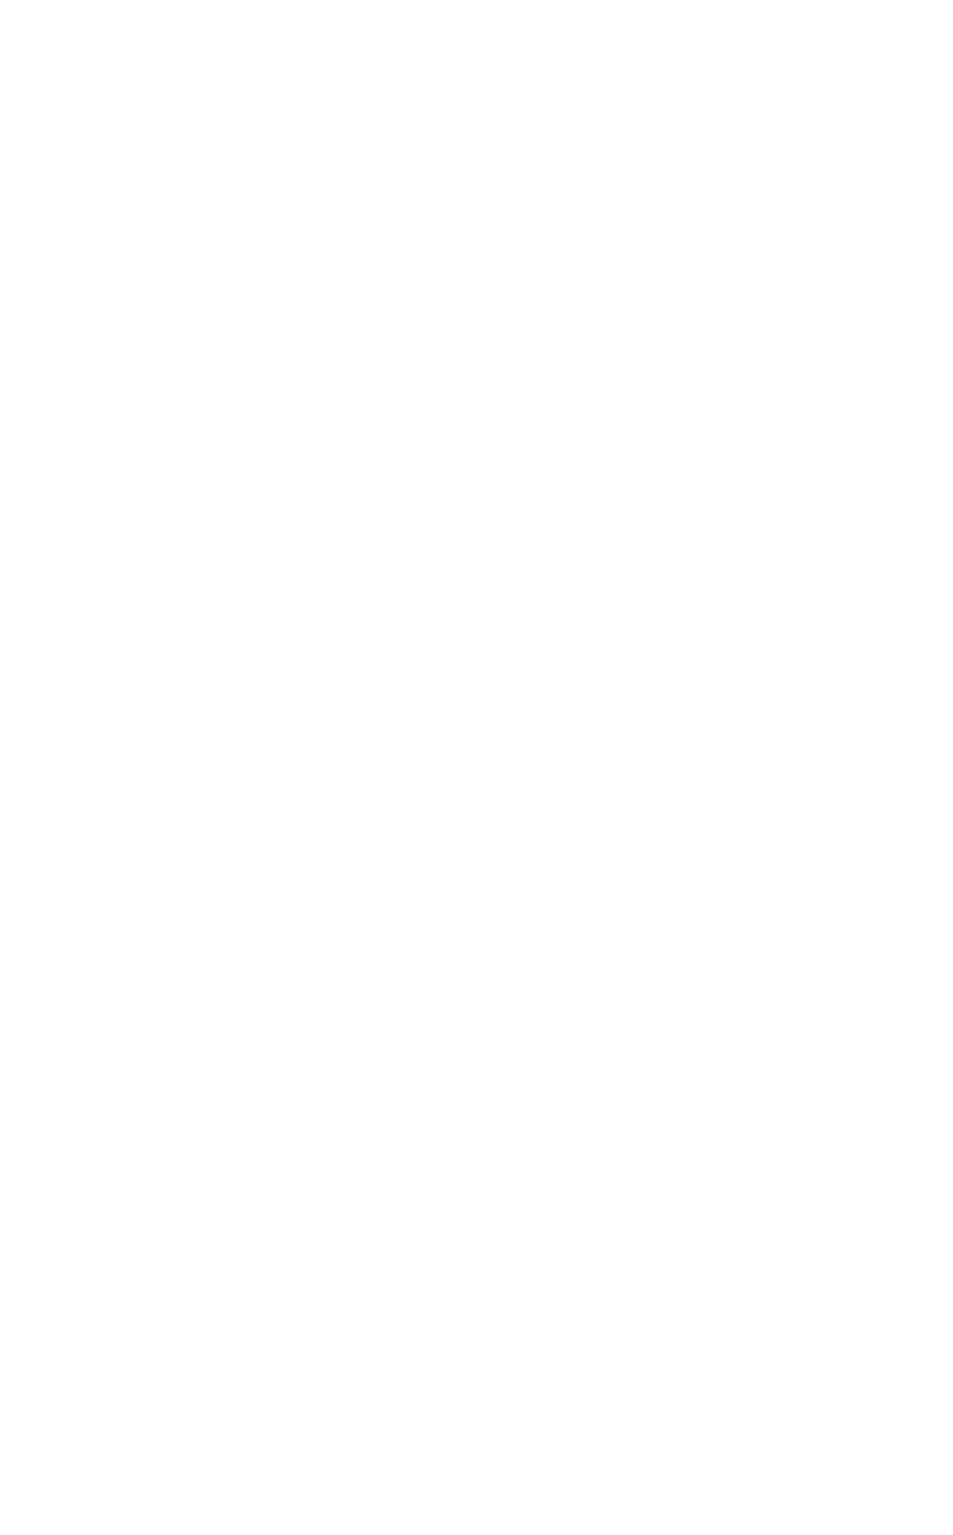 Arabian International Healthcare Holding logo pour fonds sombres (PNG transparent)